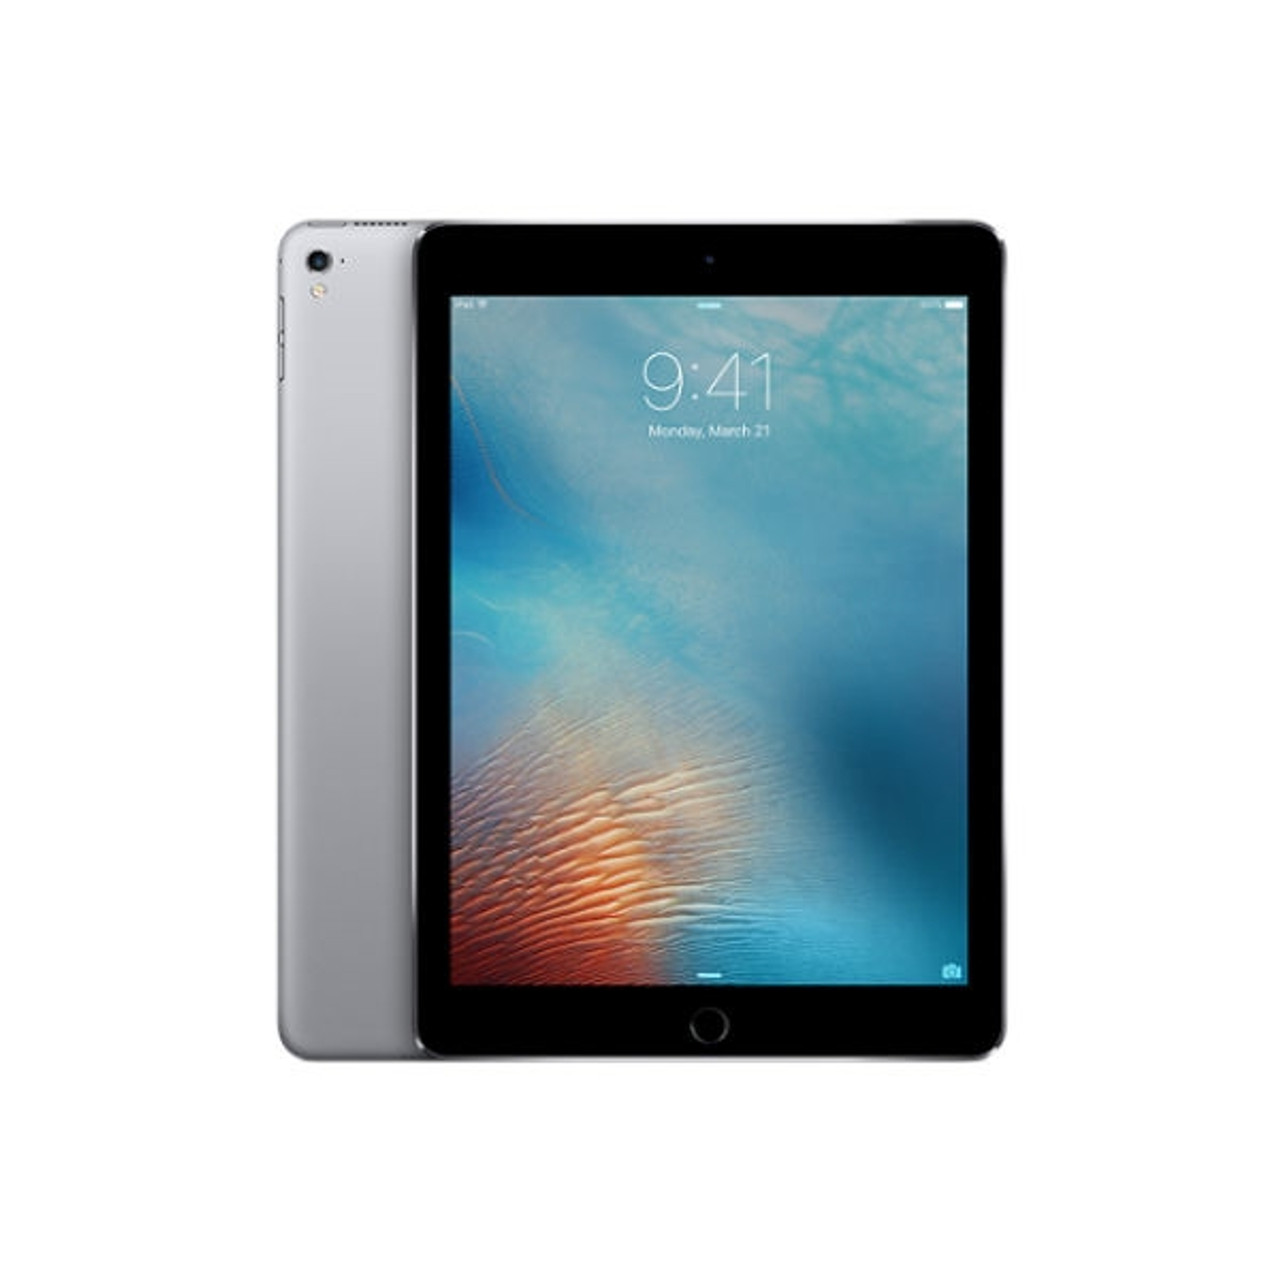 Apple iPad Pro 9.7-inch Wi-Fi 128GB - Space Gray MLMV2LL/A - Very Good  Condition*